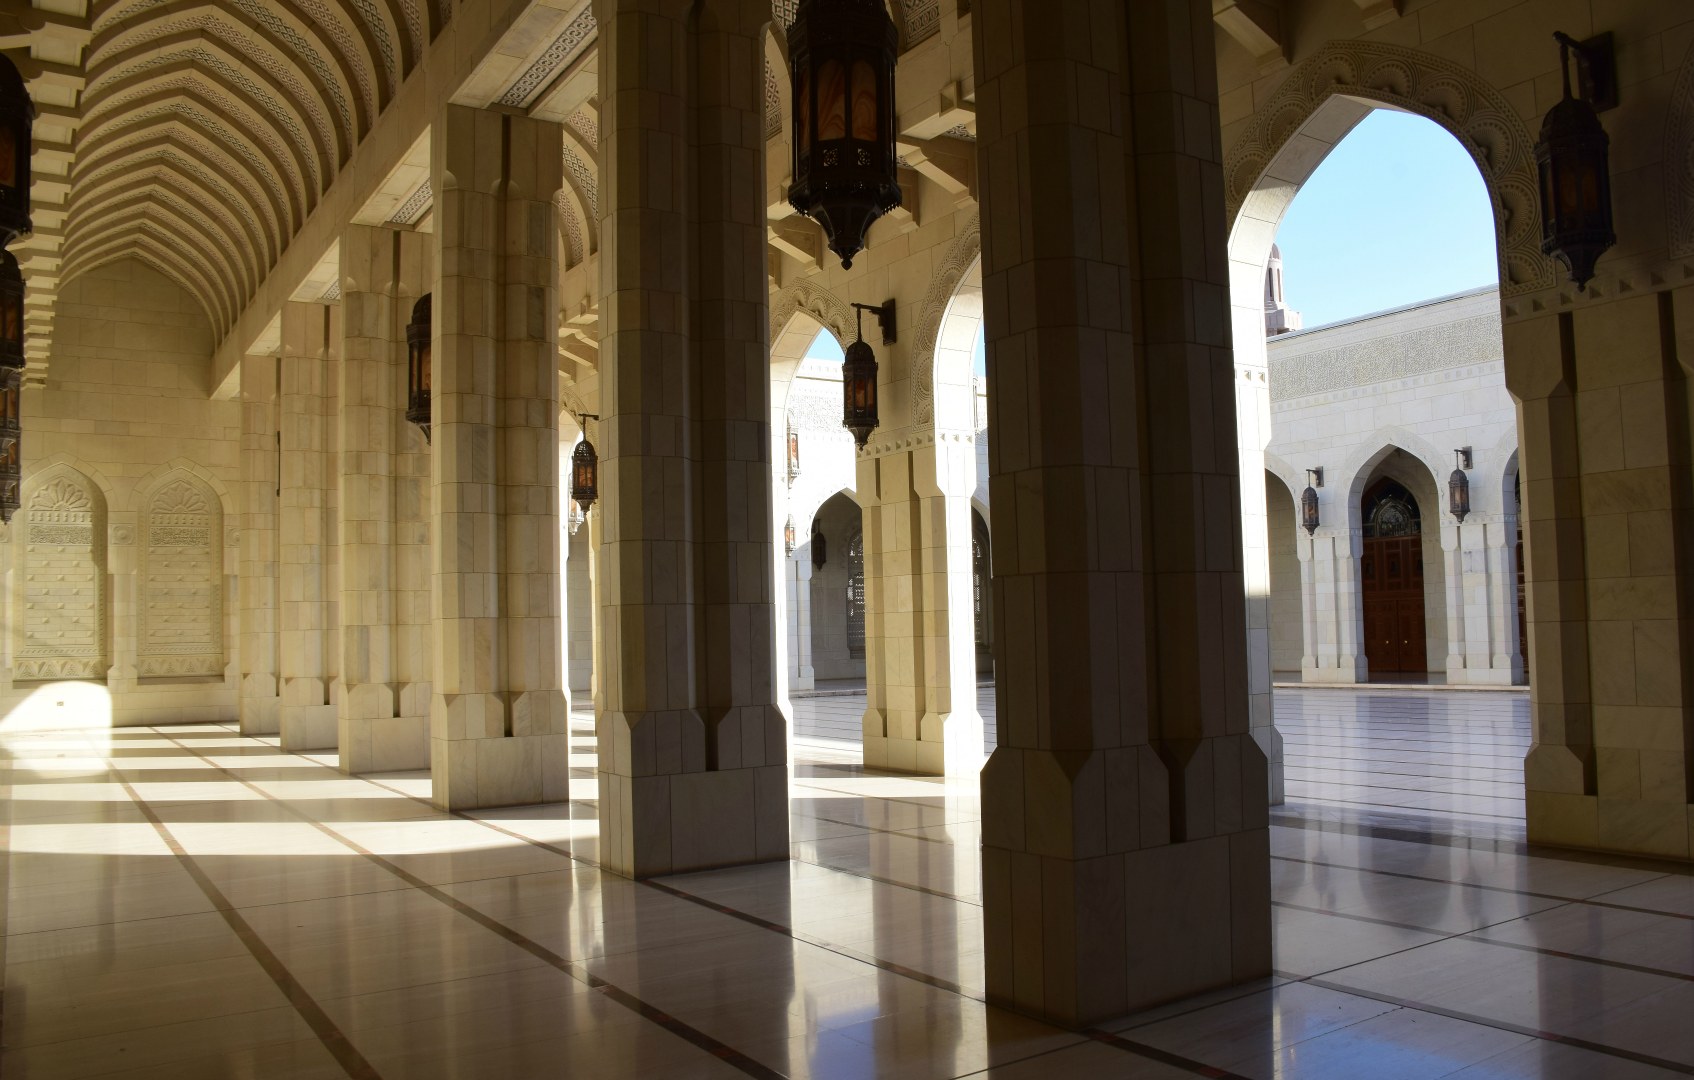 Sultan Qaboos Grand Mosque, Muscat